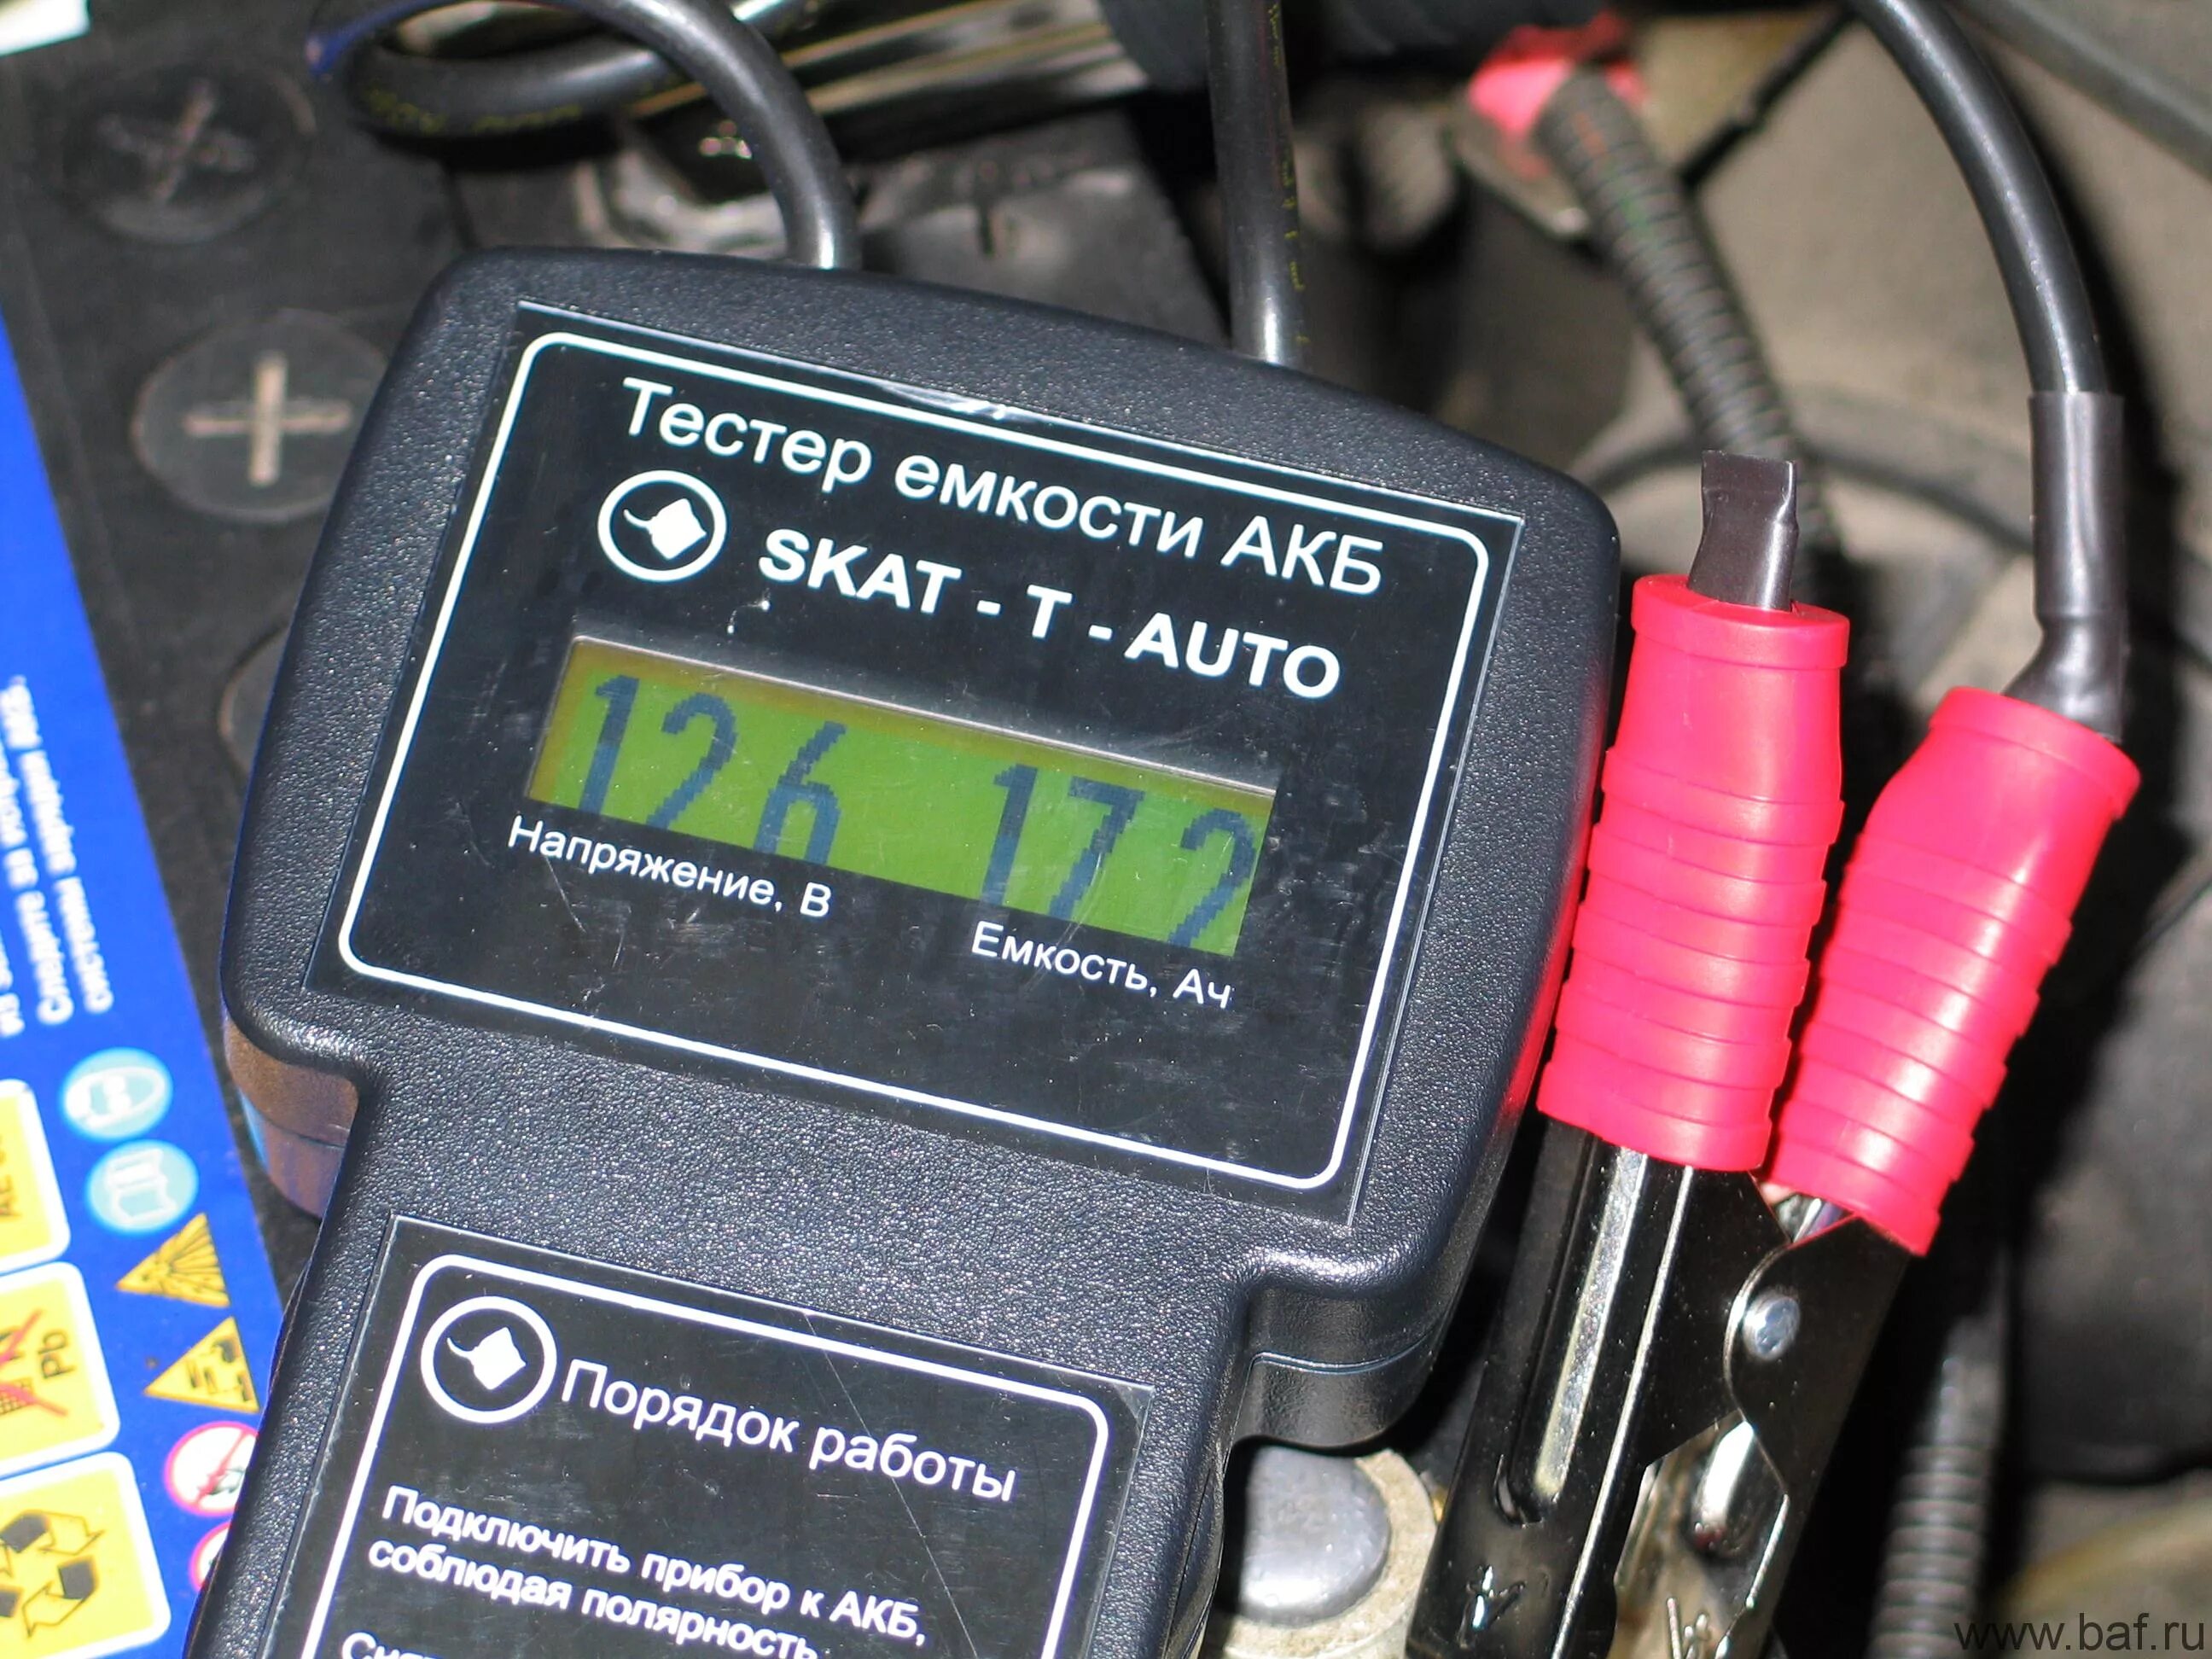 Battery capacity. Тестер ёмкости АКБ Skat-t-auto. Тестер емкости аккумулятора Skat t. Мультиметр для проверки ёмкости АКБ автомобиля 12в. Тестер емкости аккумулятора "Калибр".